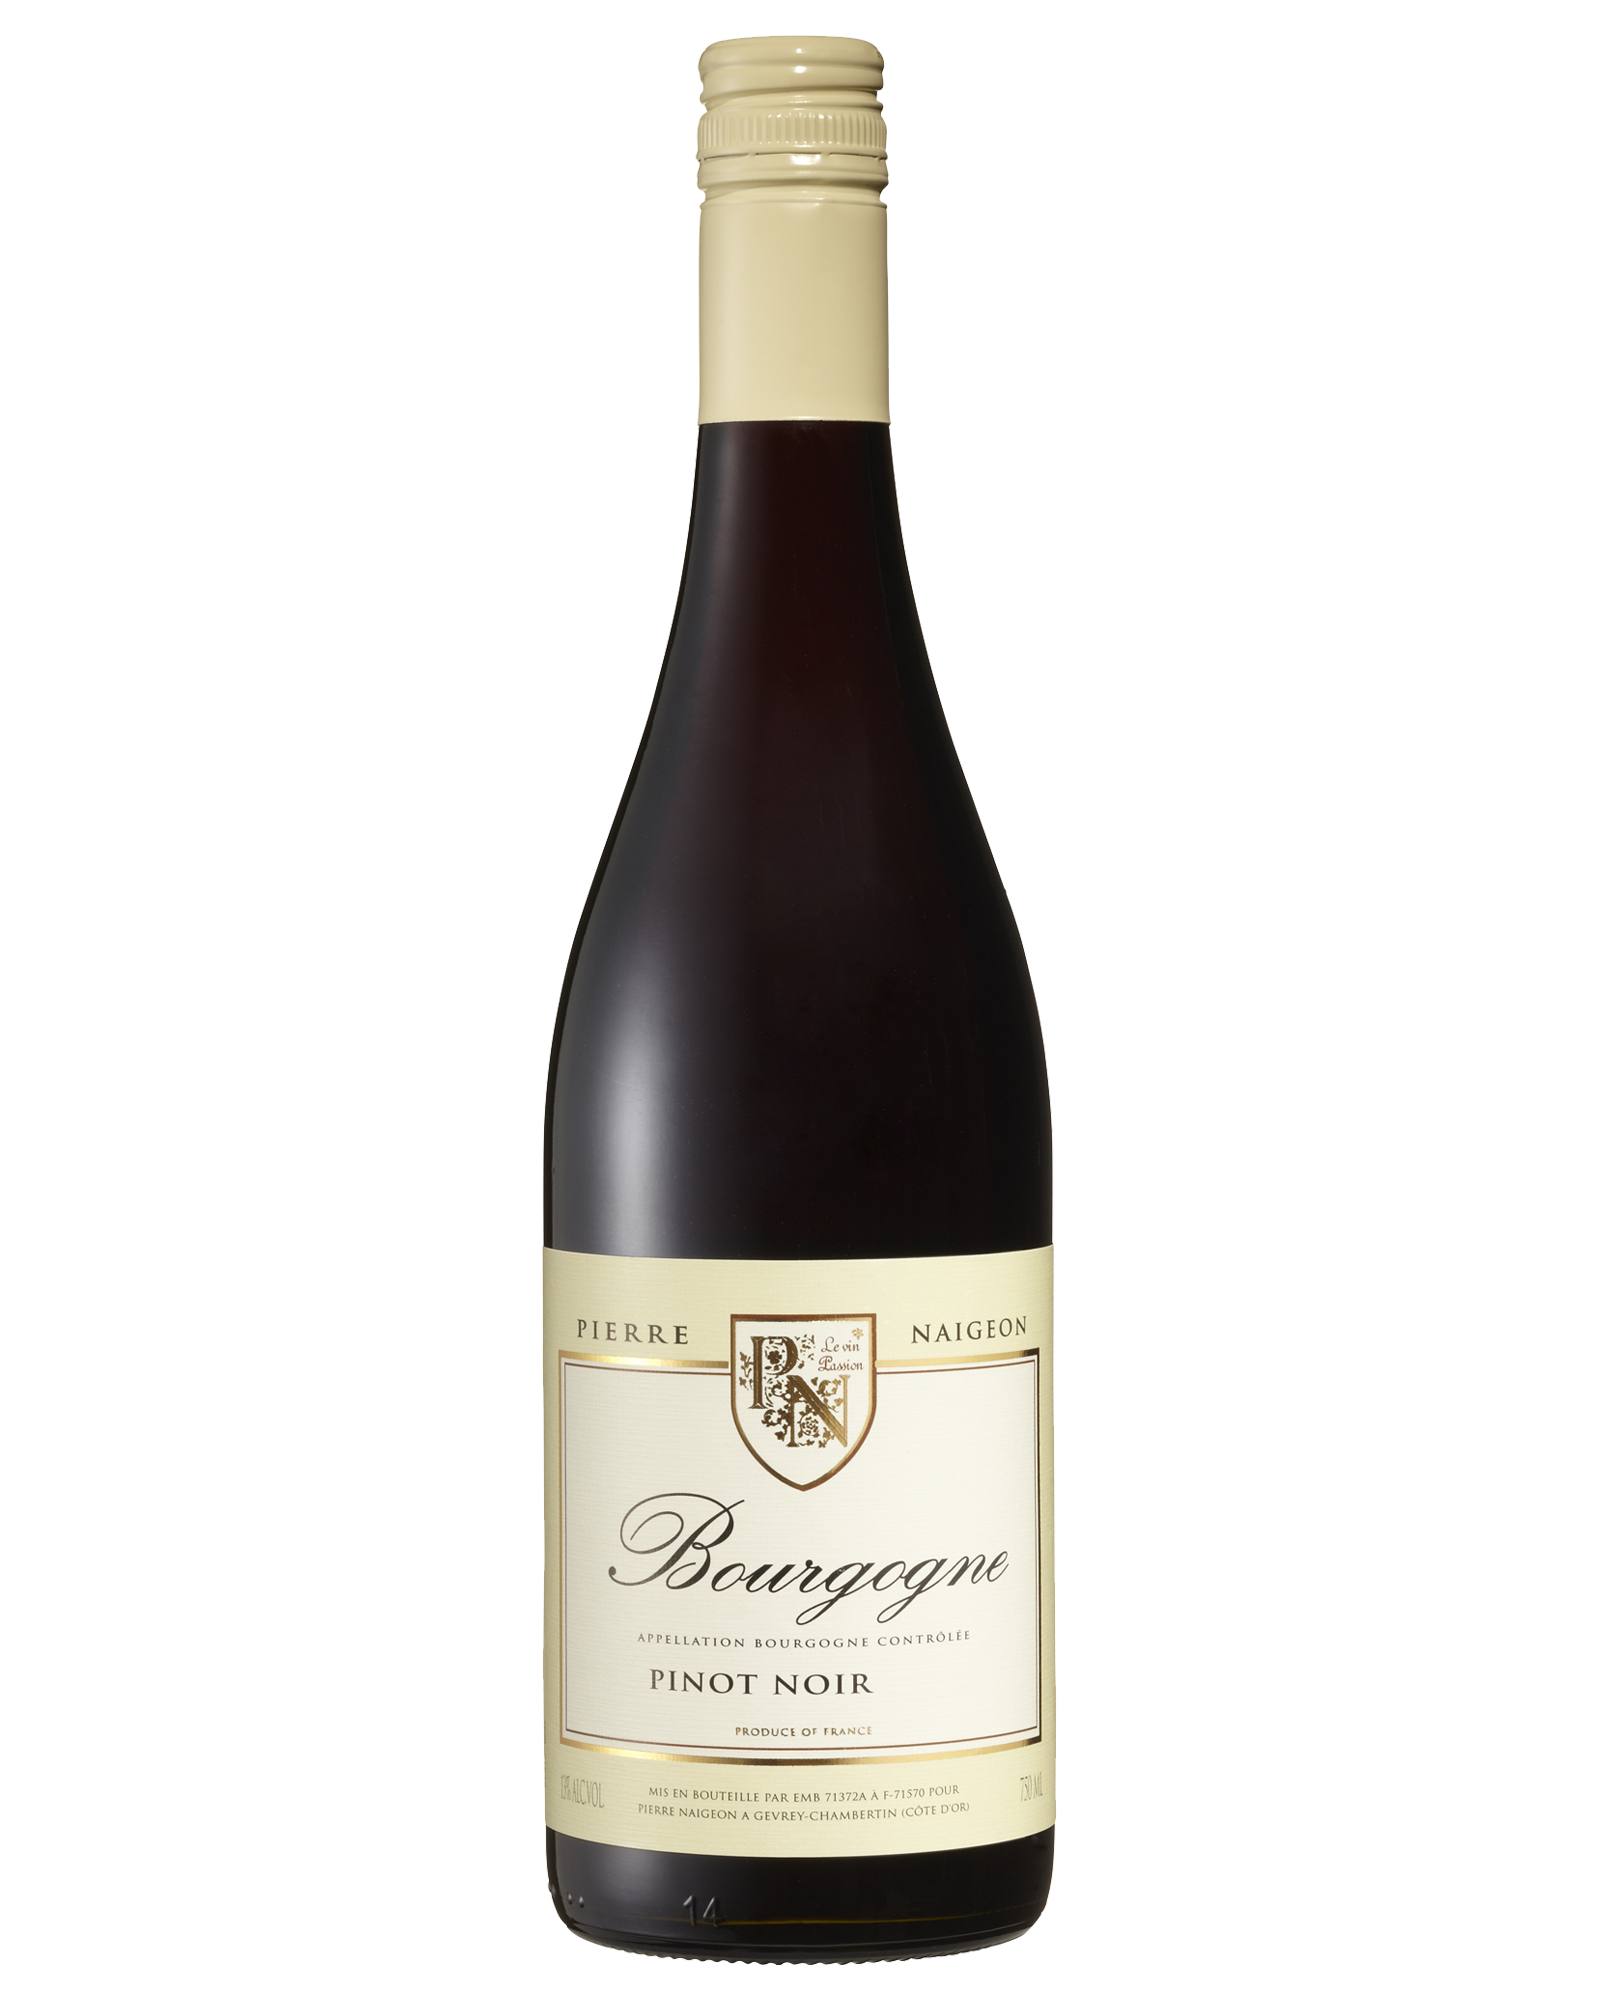 Pierre Naigeon Bourgogne Pinot Noir